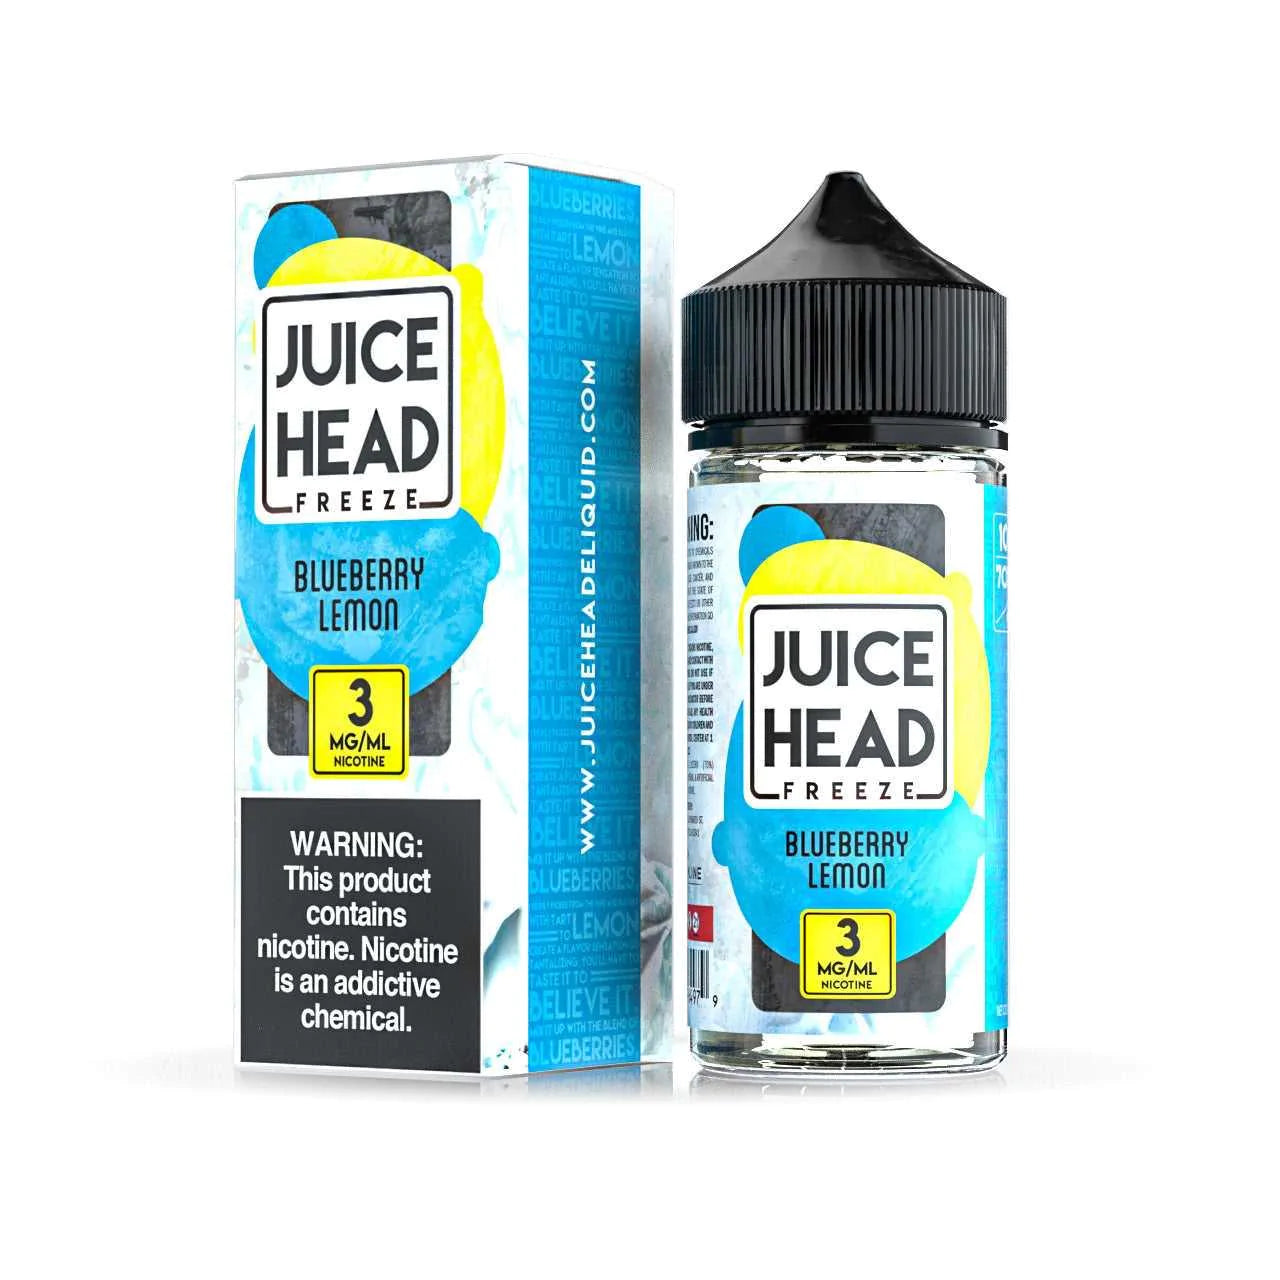 Juice Head Freeze: Blueberry Lemon